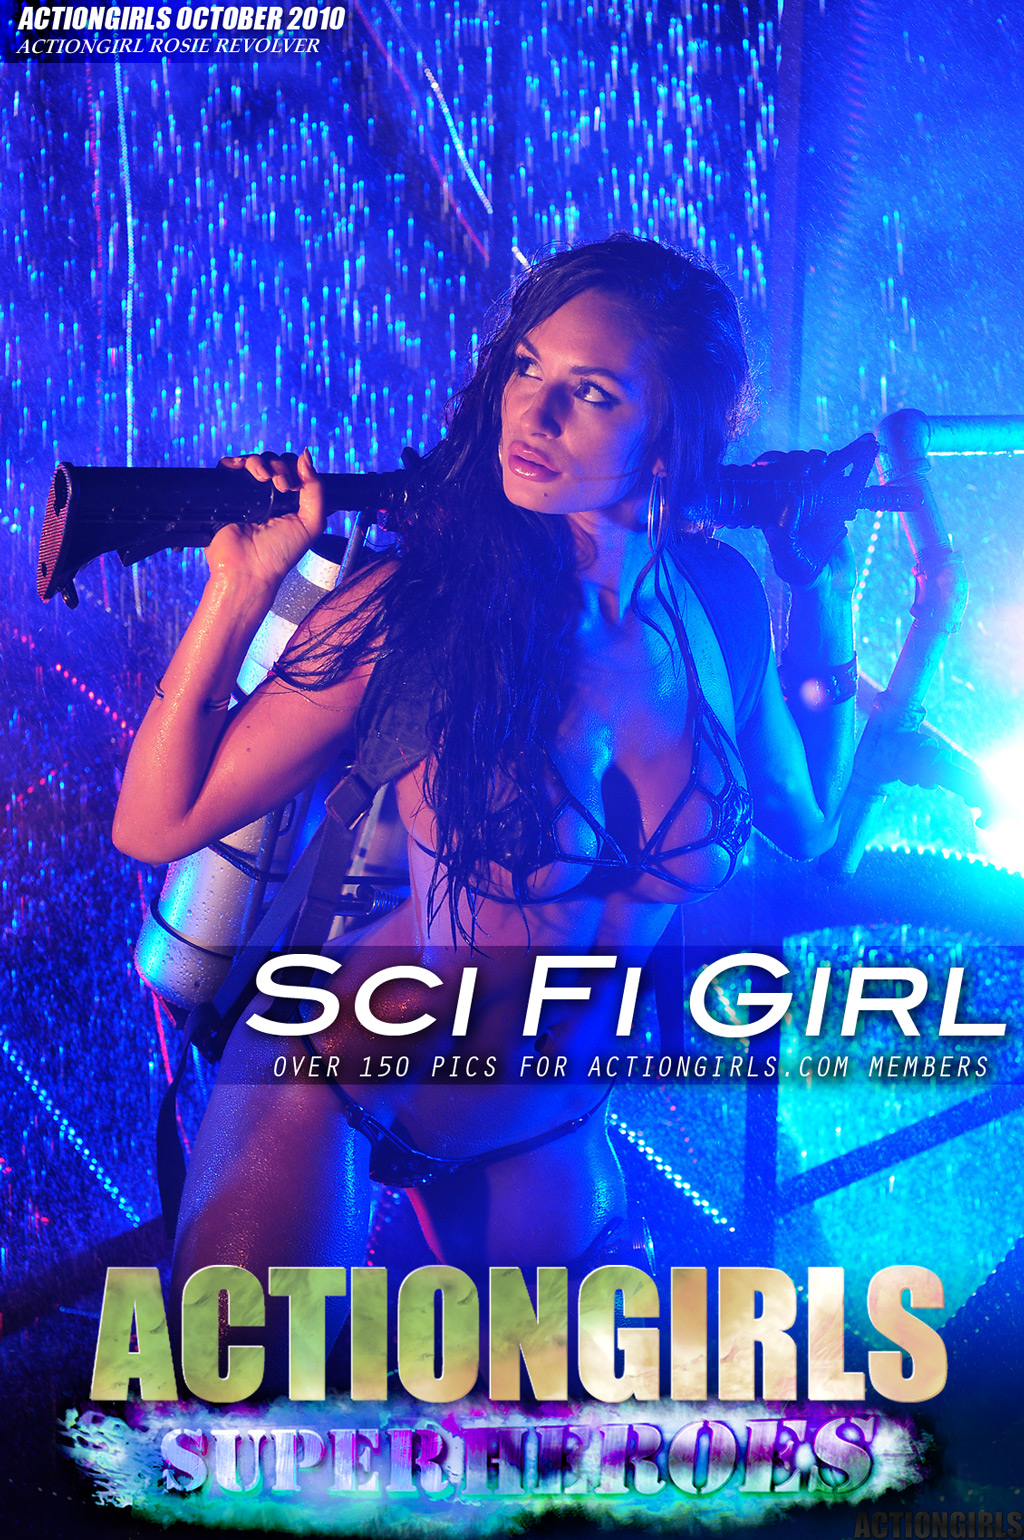 Scotty JX's Rosie Revolver Sci Fi Girl